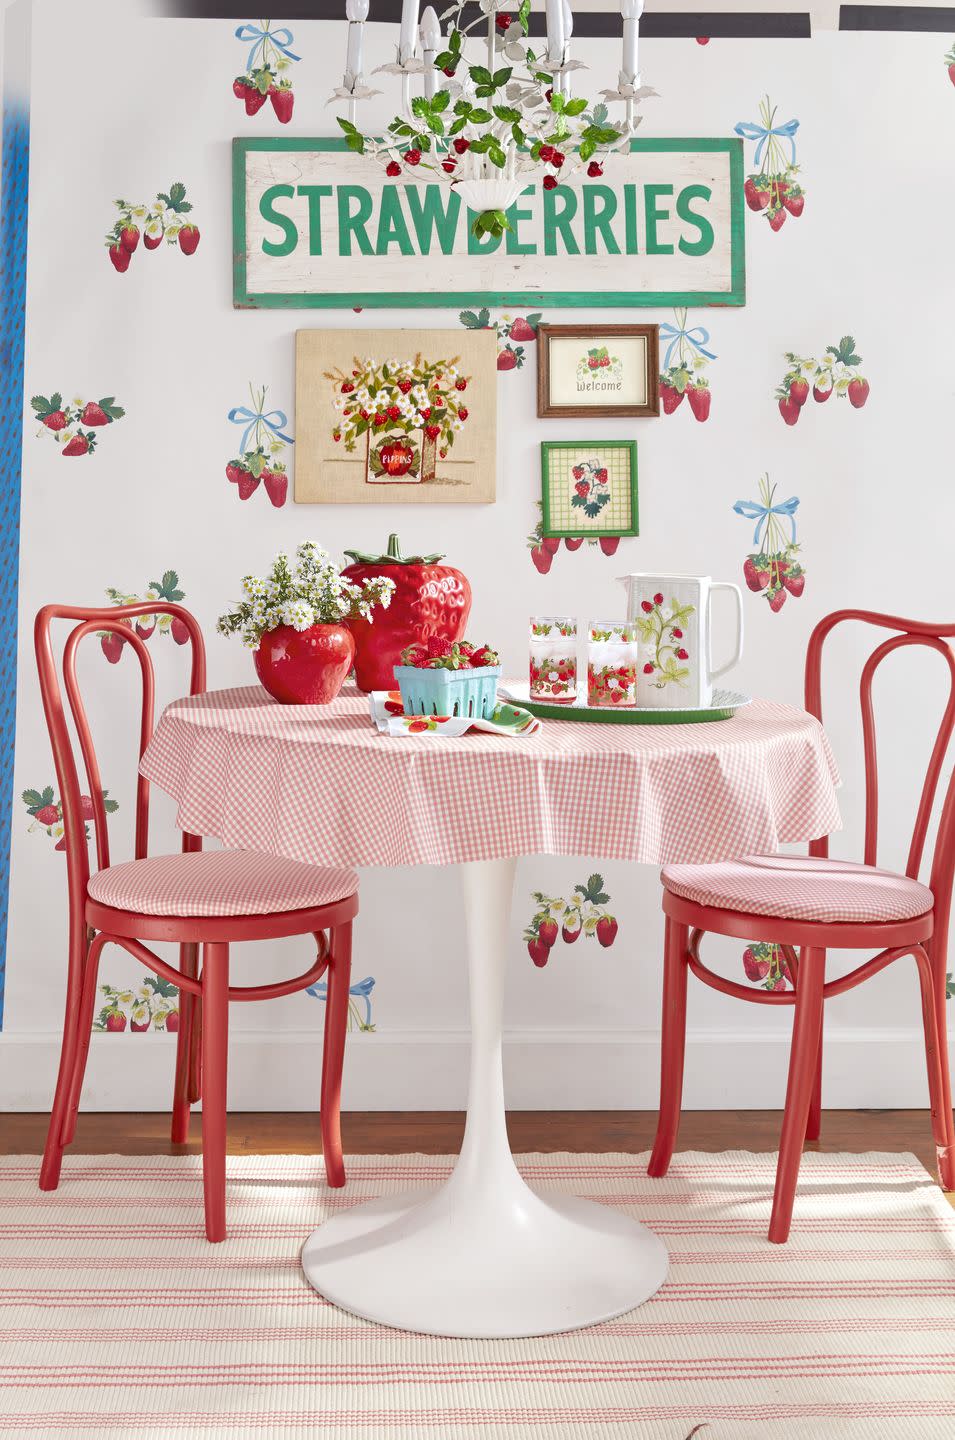 vintage-style strawberry kitchen wallpaper